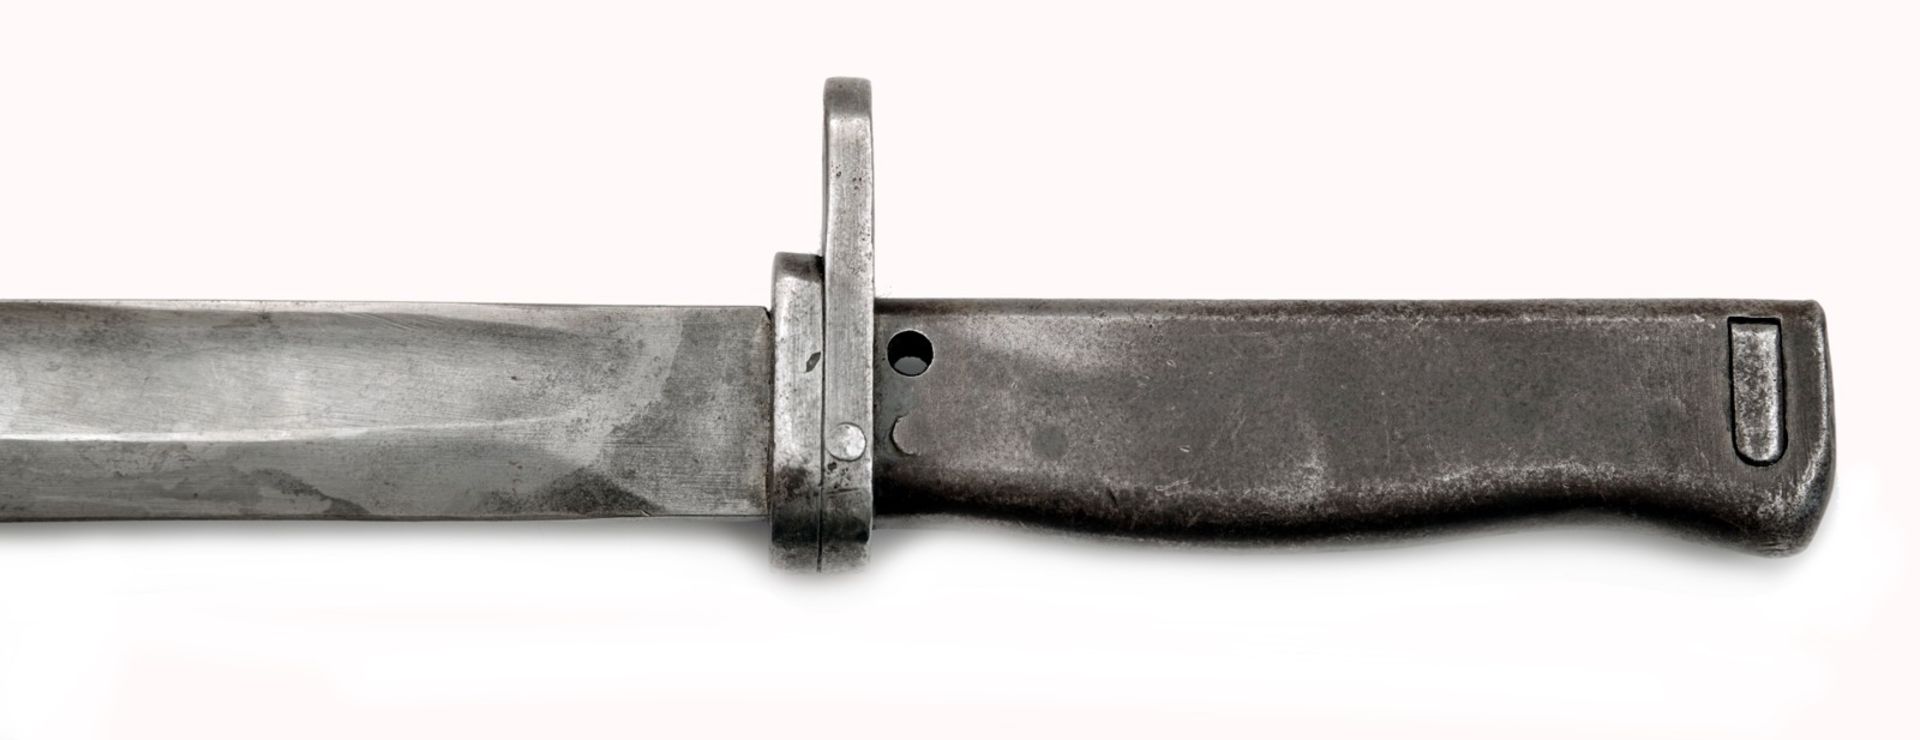 All-Steel 1916 Ersatz Bayonet - Image 2 of 3